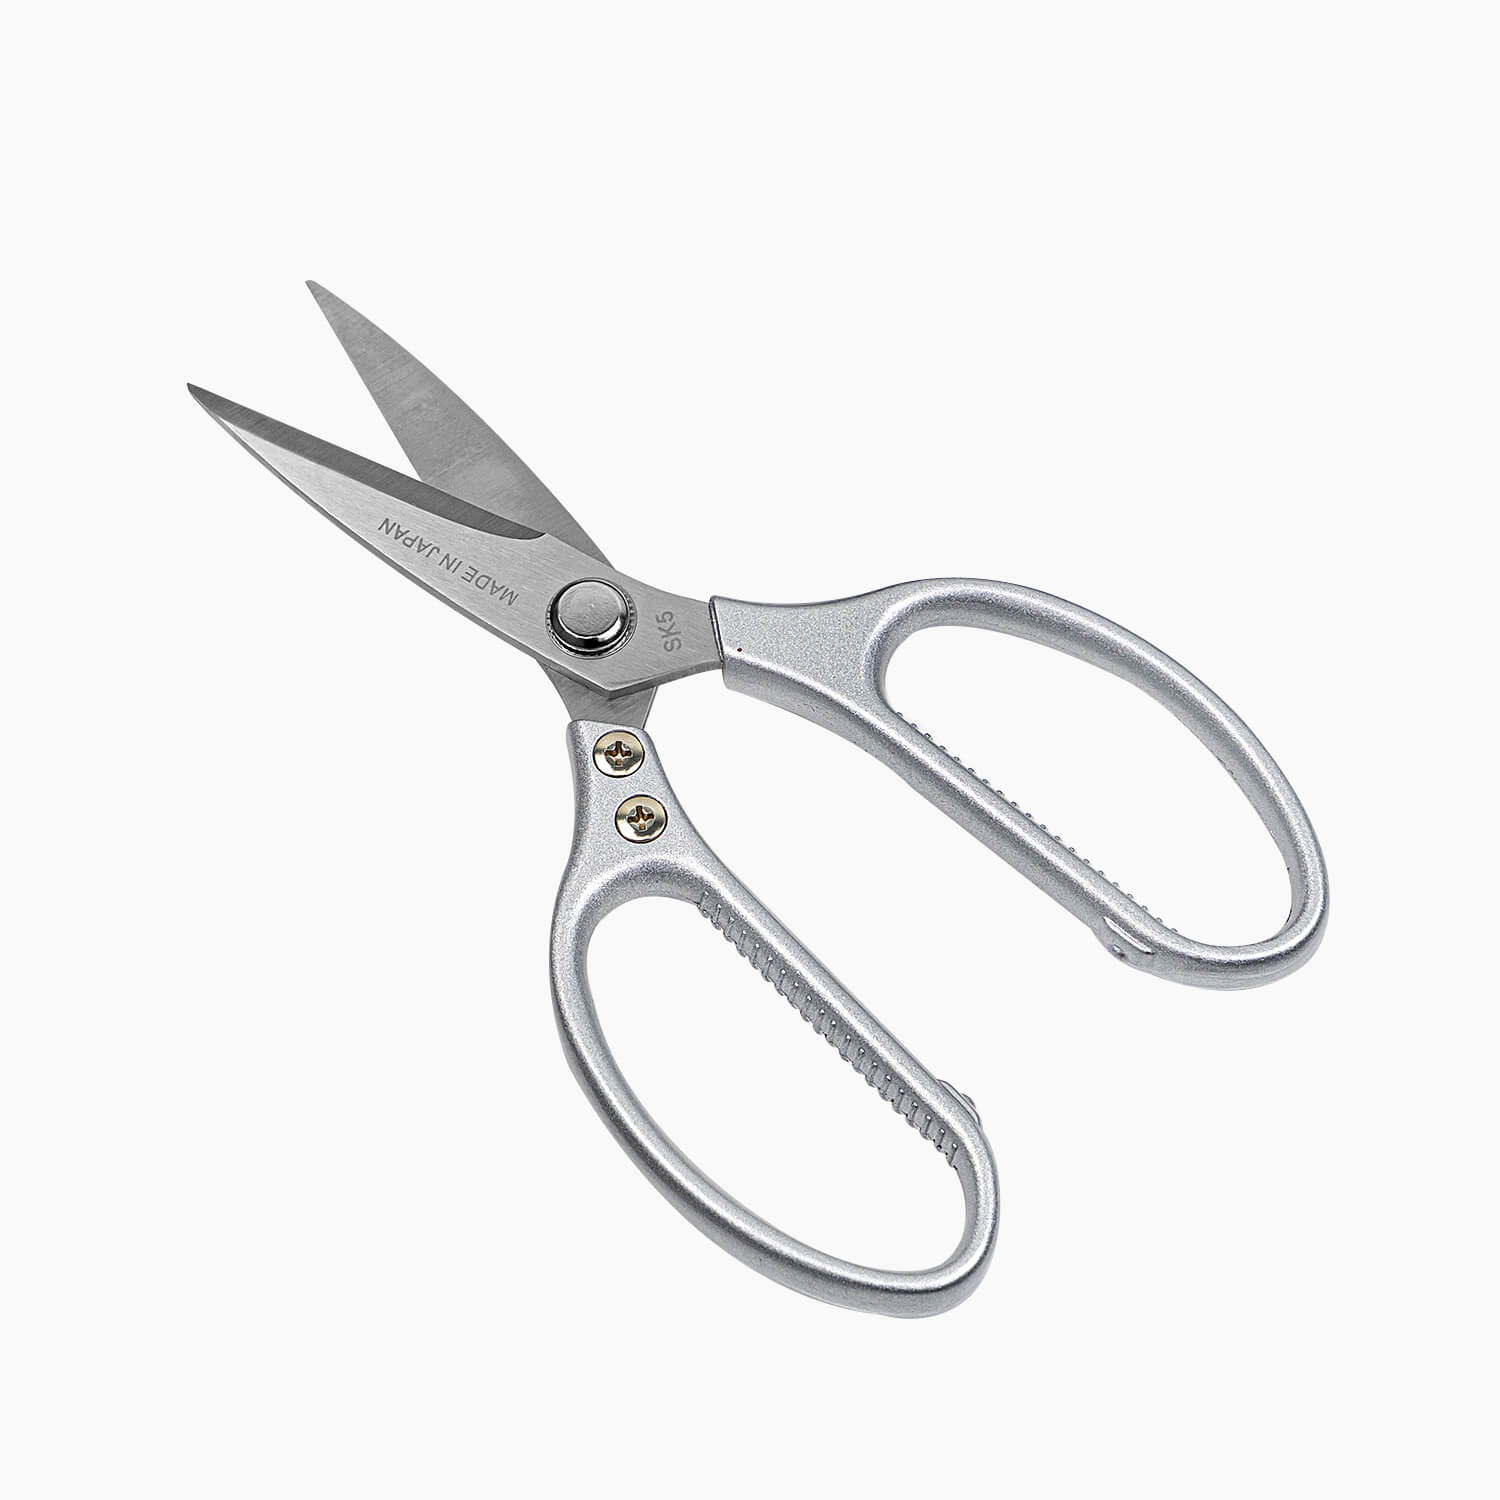 Papercuts By Joe Blog: Tools of the trade- Knives